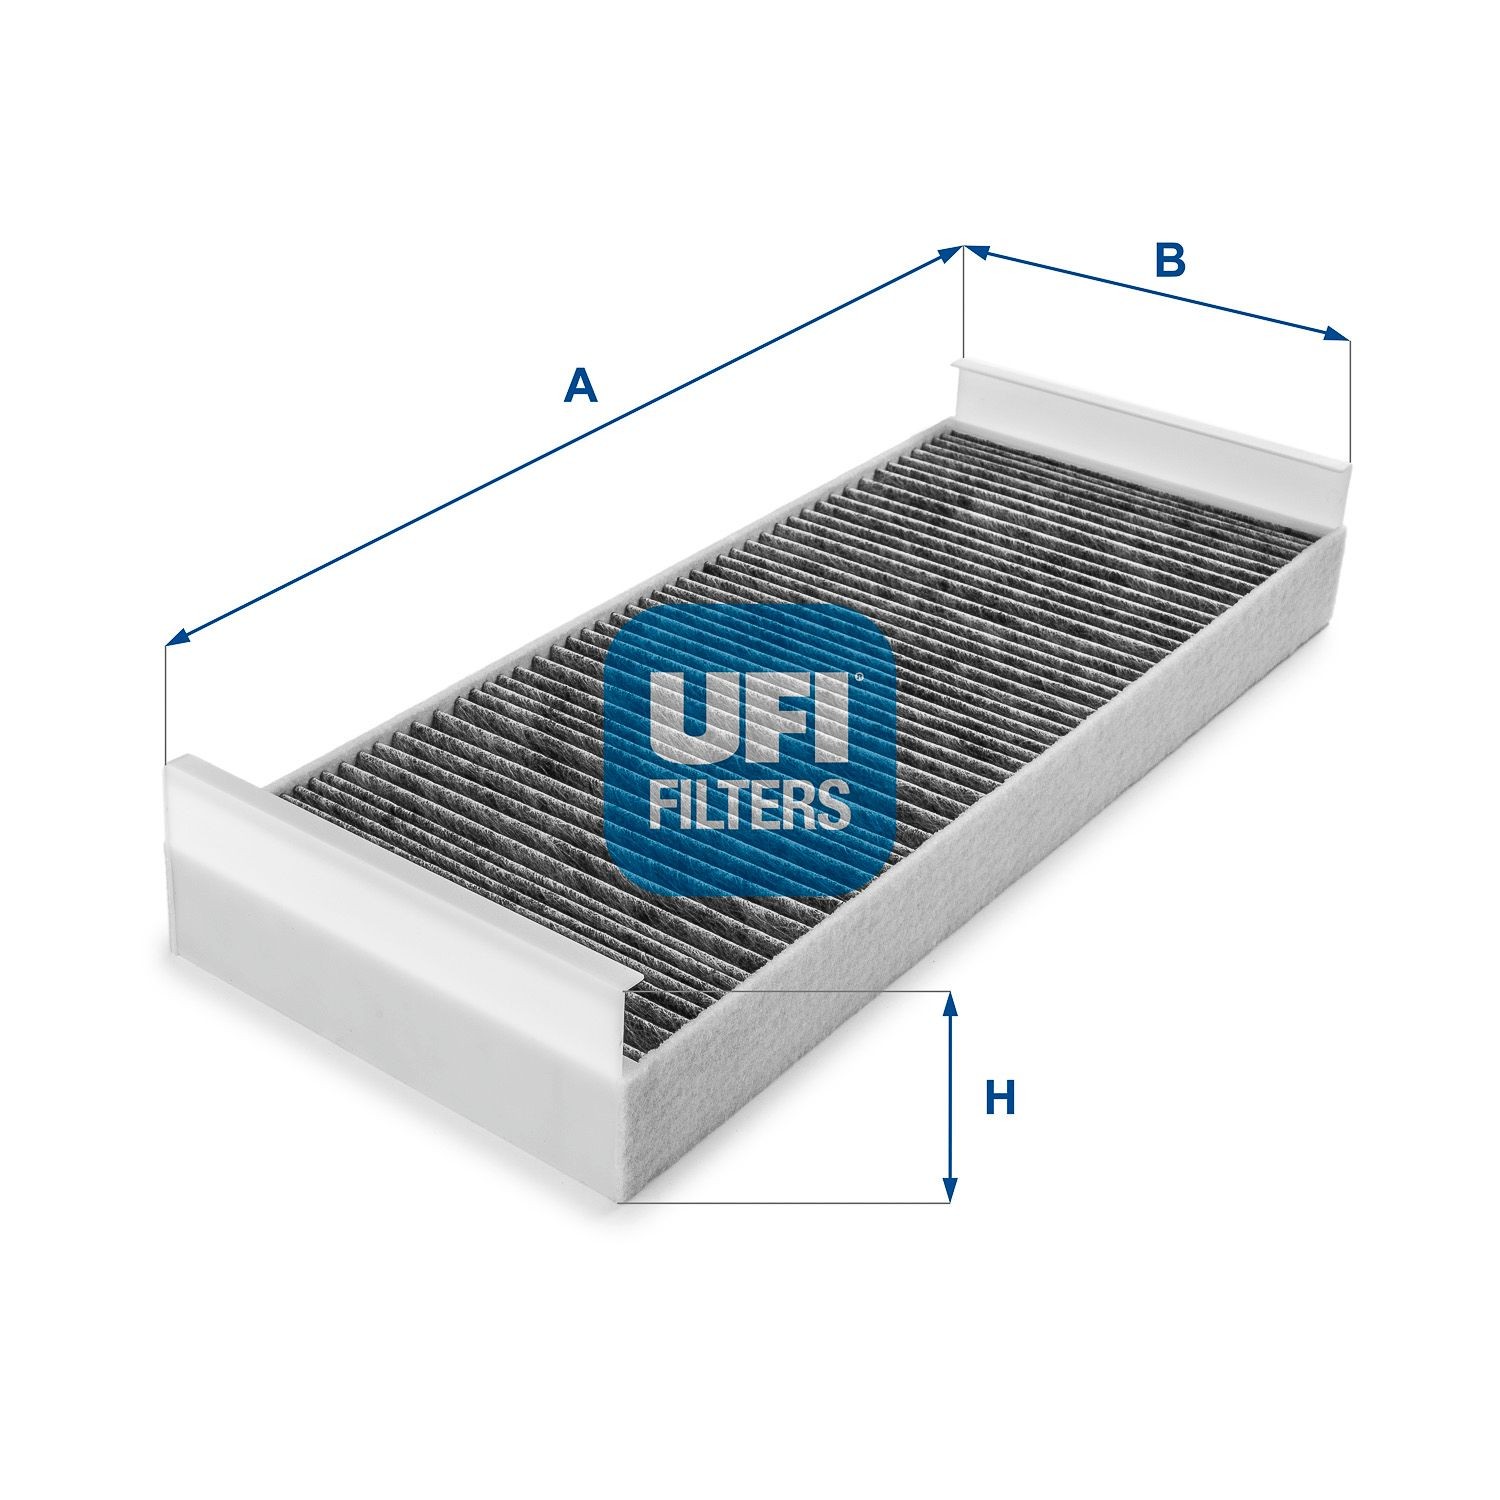 UFI Aktivkohlefilter, 462 mm x 179 mm x 70 mm Breite: 179mm, Höhe: 70mm, Länge: 462mm Innenraumfilter 54.177.00 kaufen